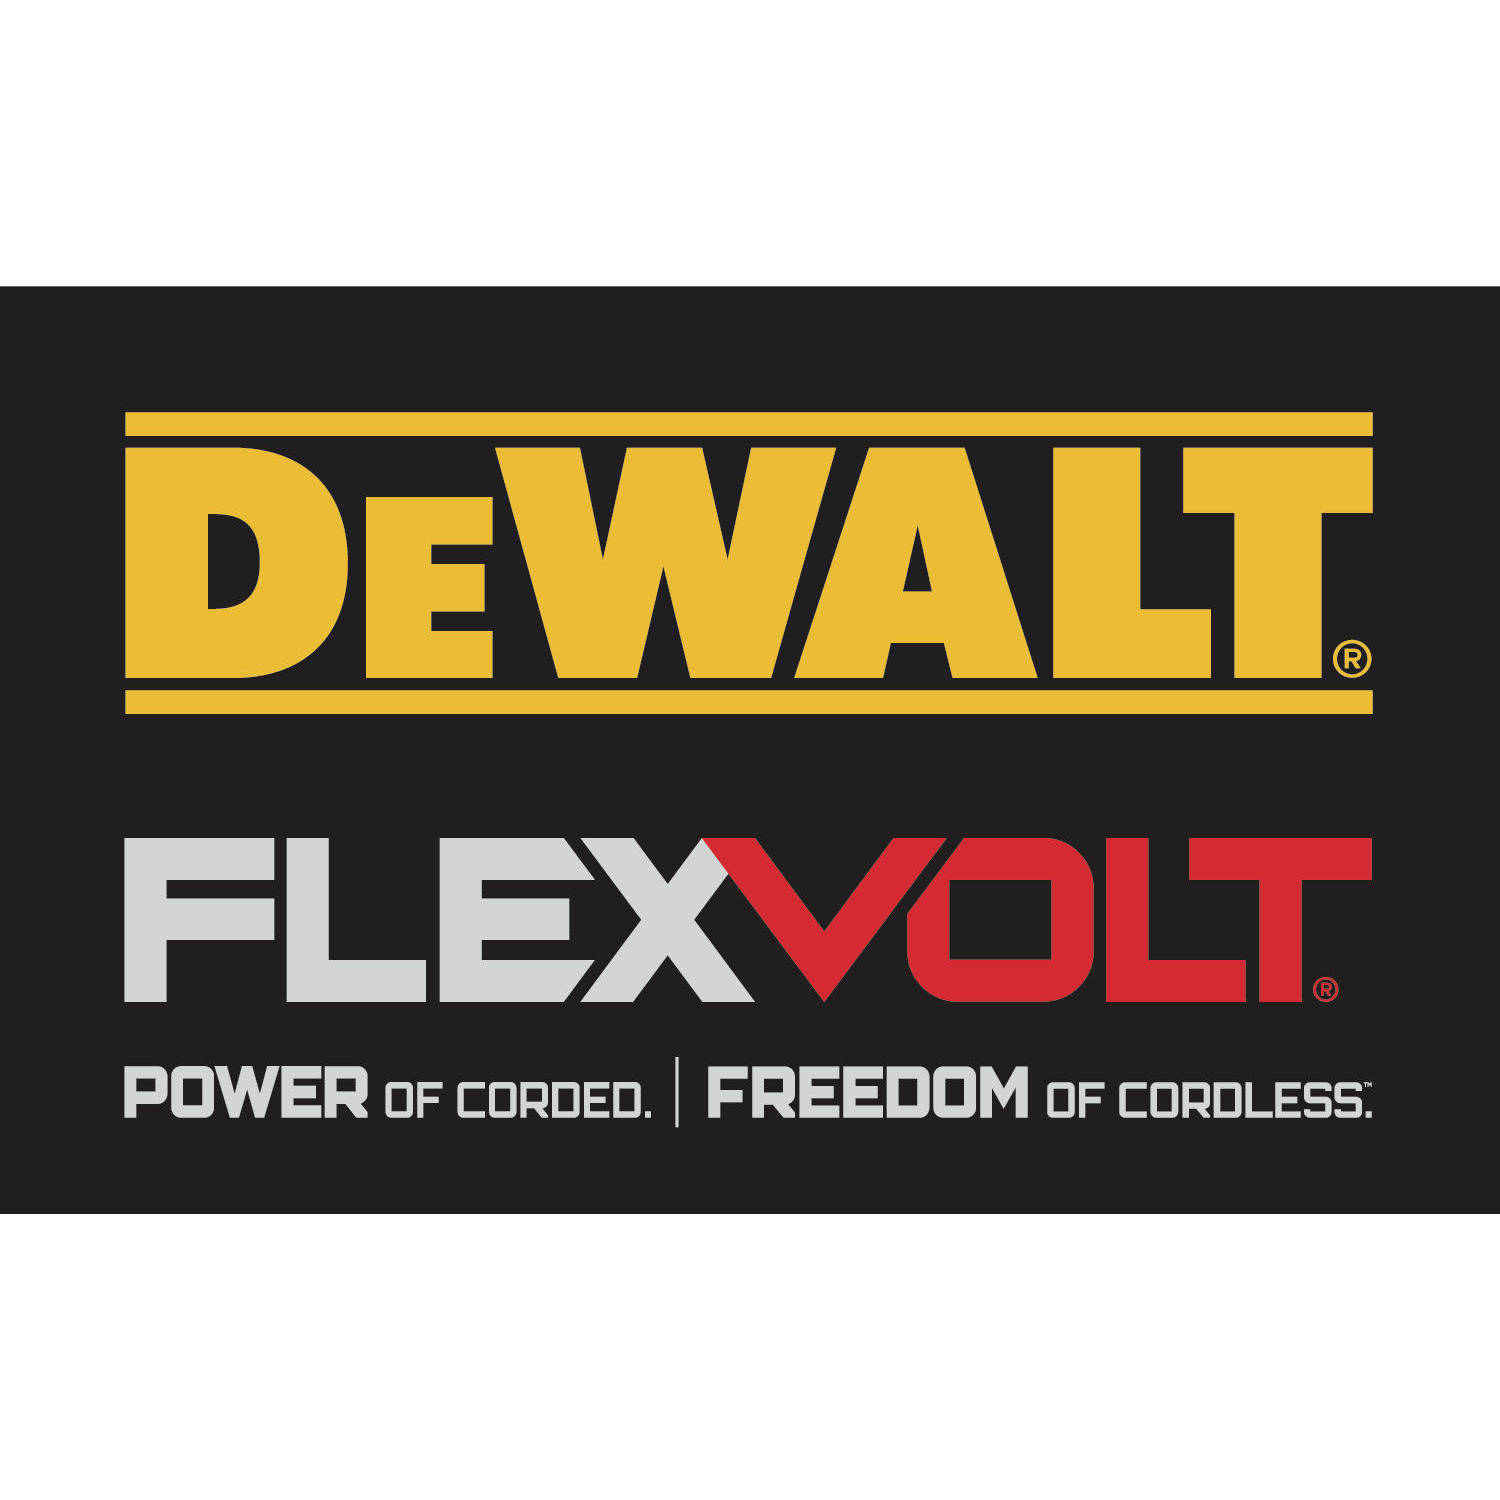 Dewalt FLEXVOLT - Power of Corded - Freedom of Cordless